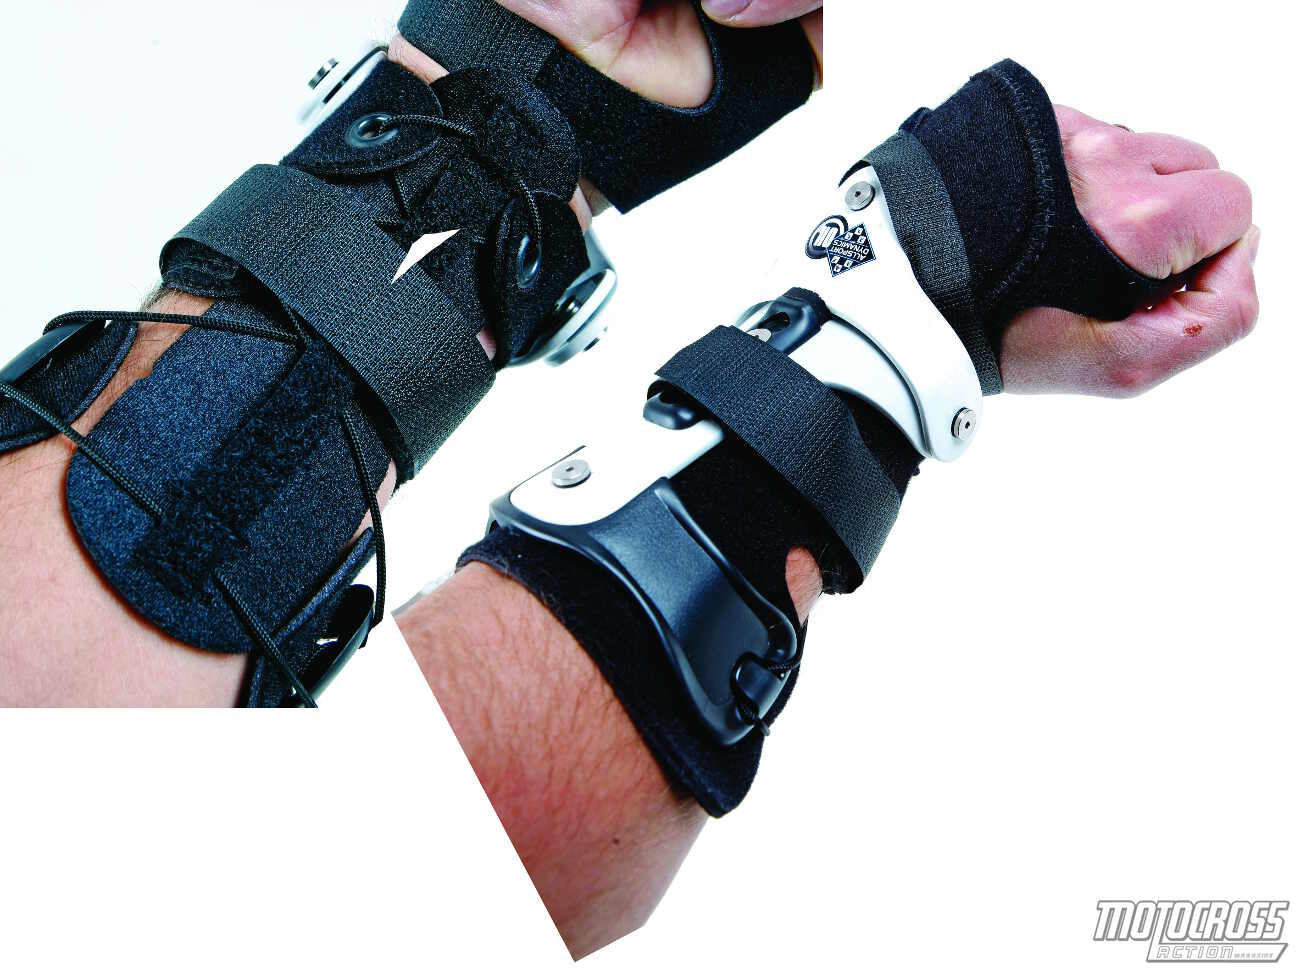 Mxa team tested: allsport dynamics OH2 lacer wrist brace.